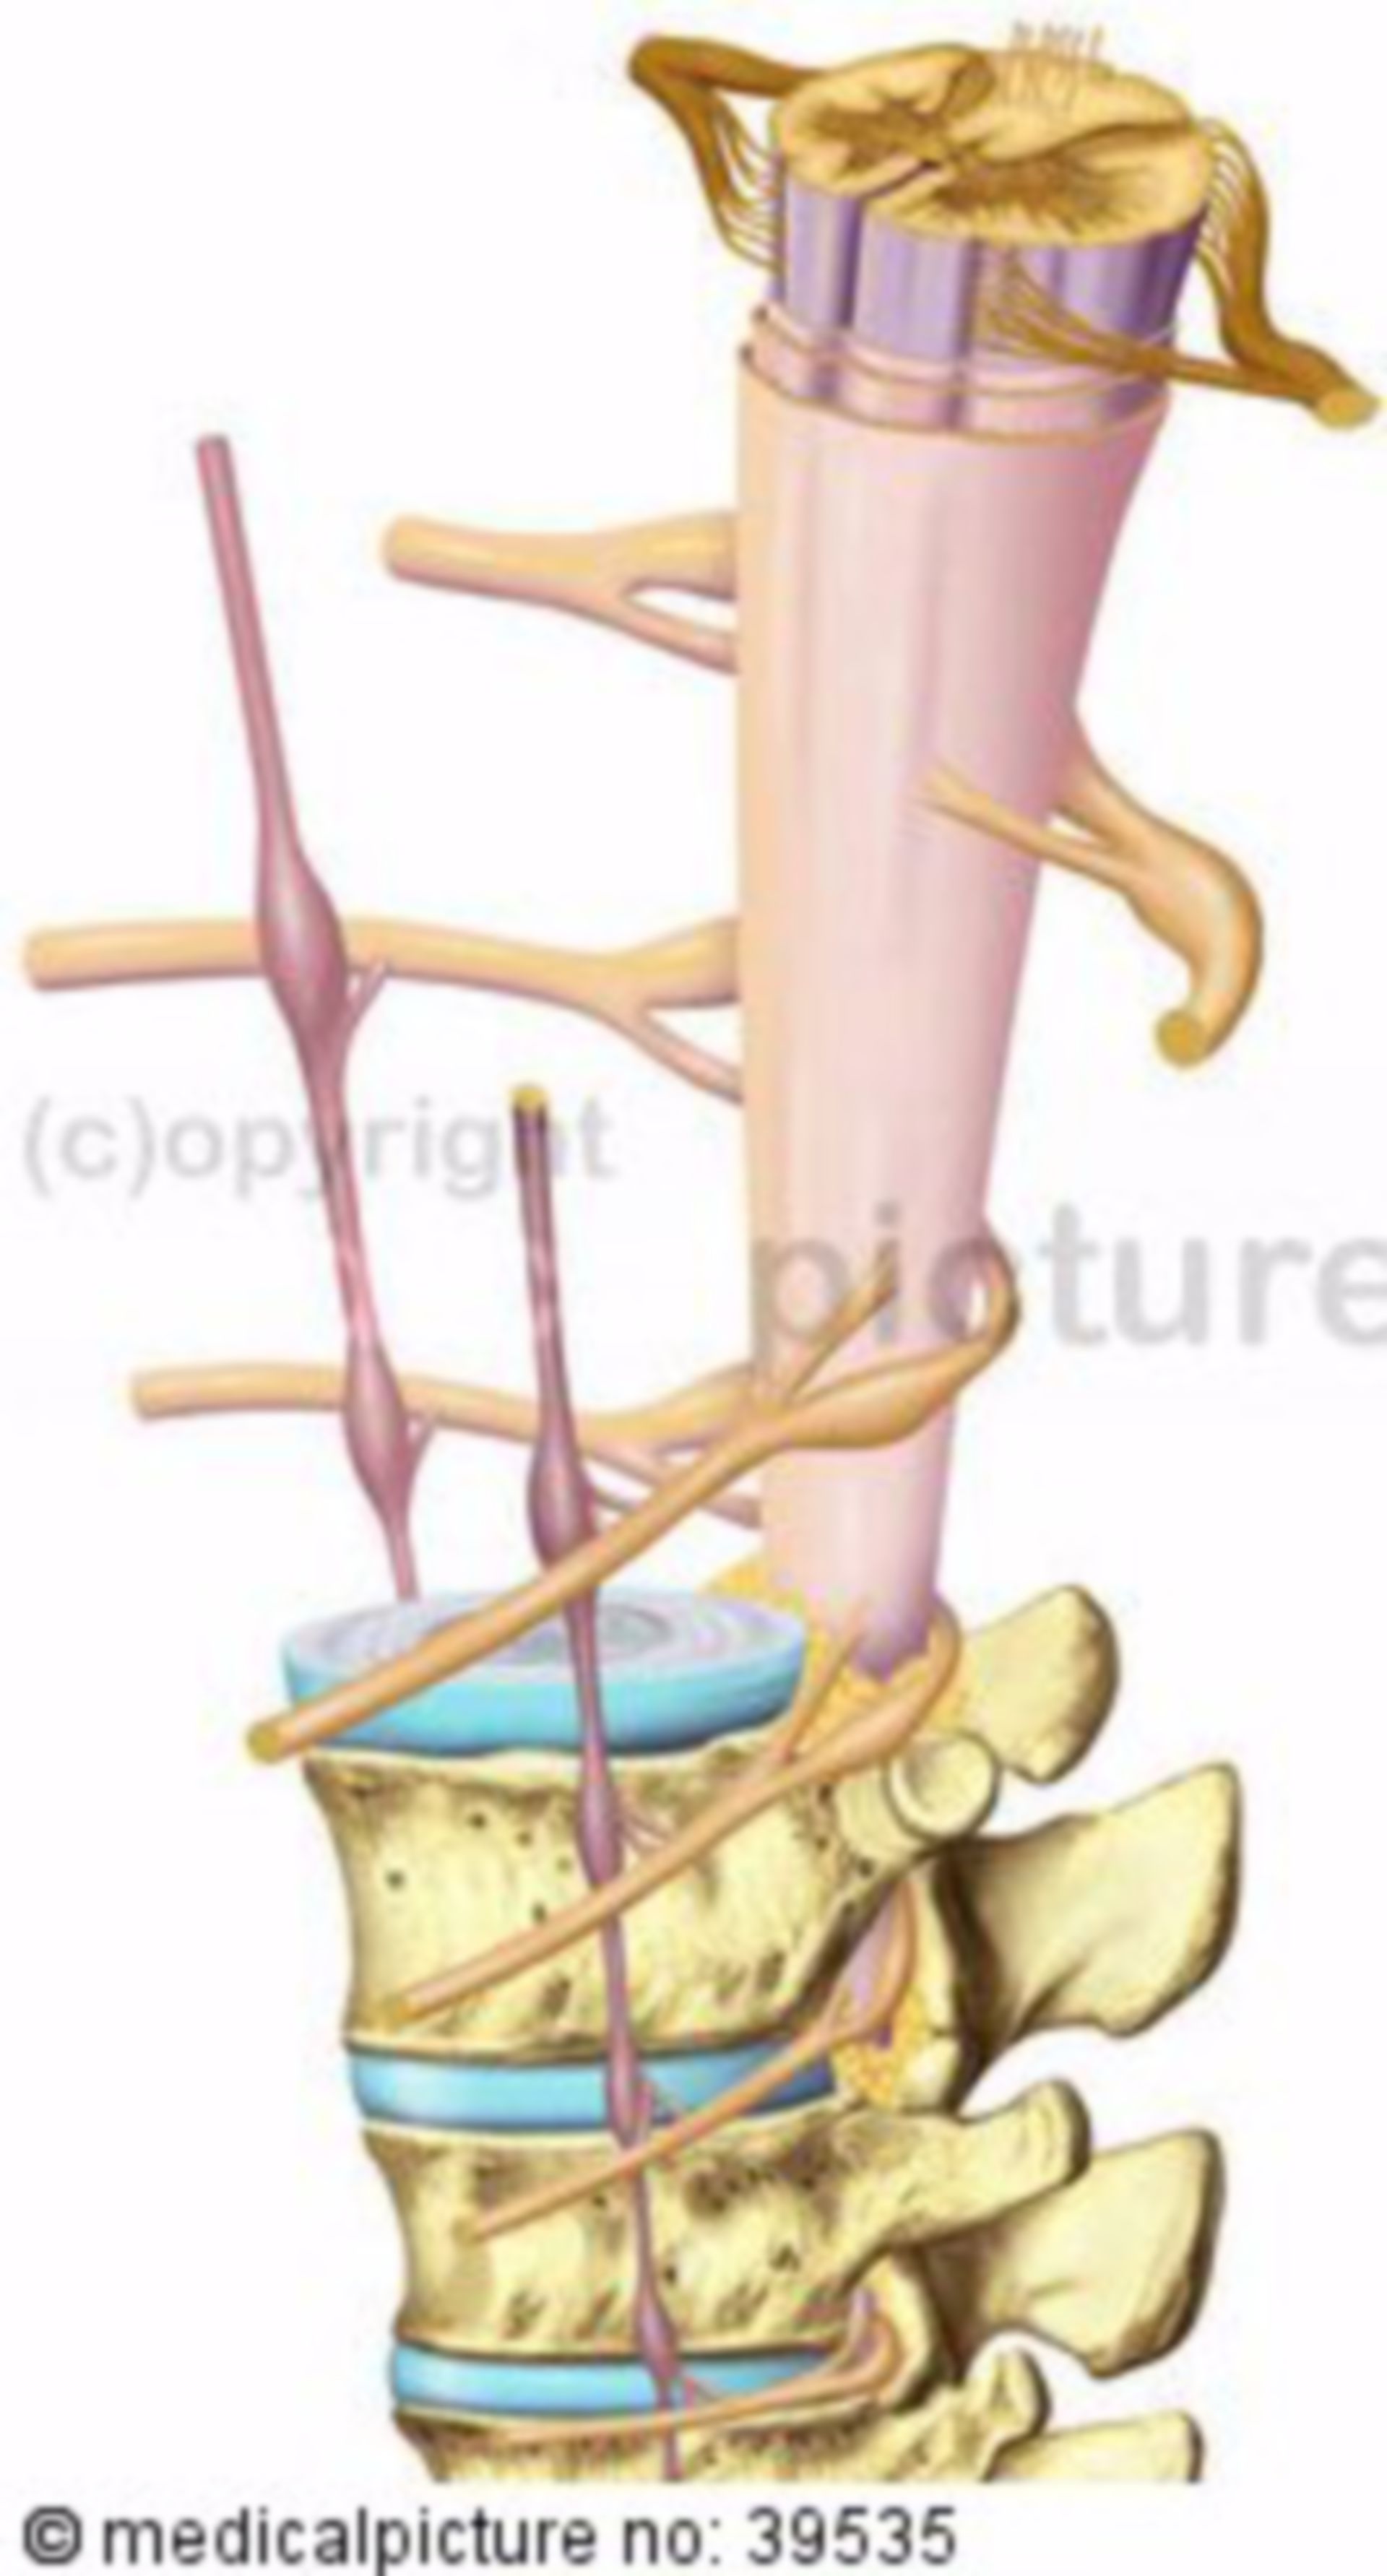 Vertebral column and spinal cord